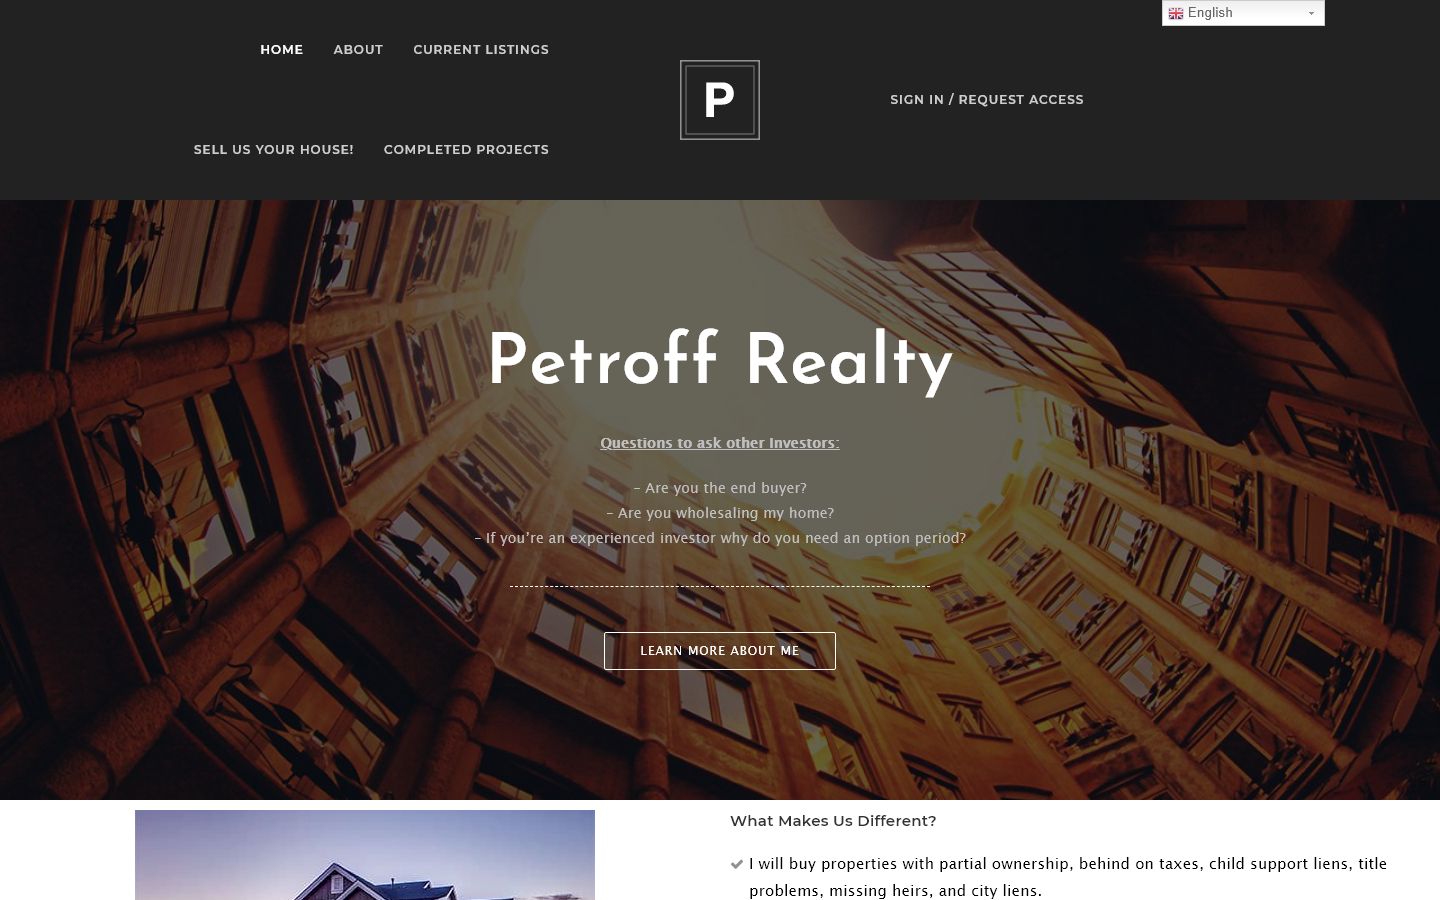 Petroff Realty